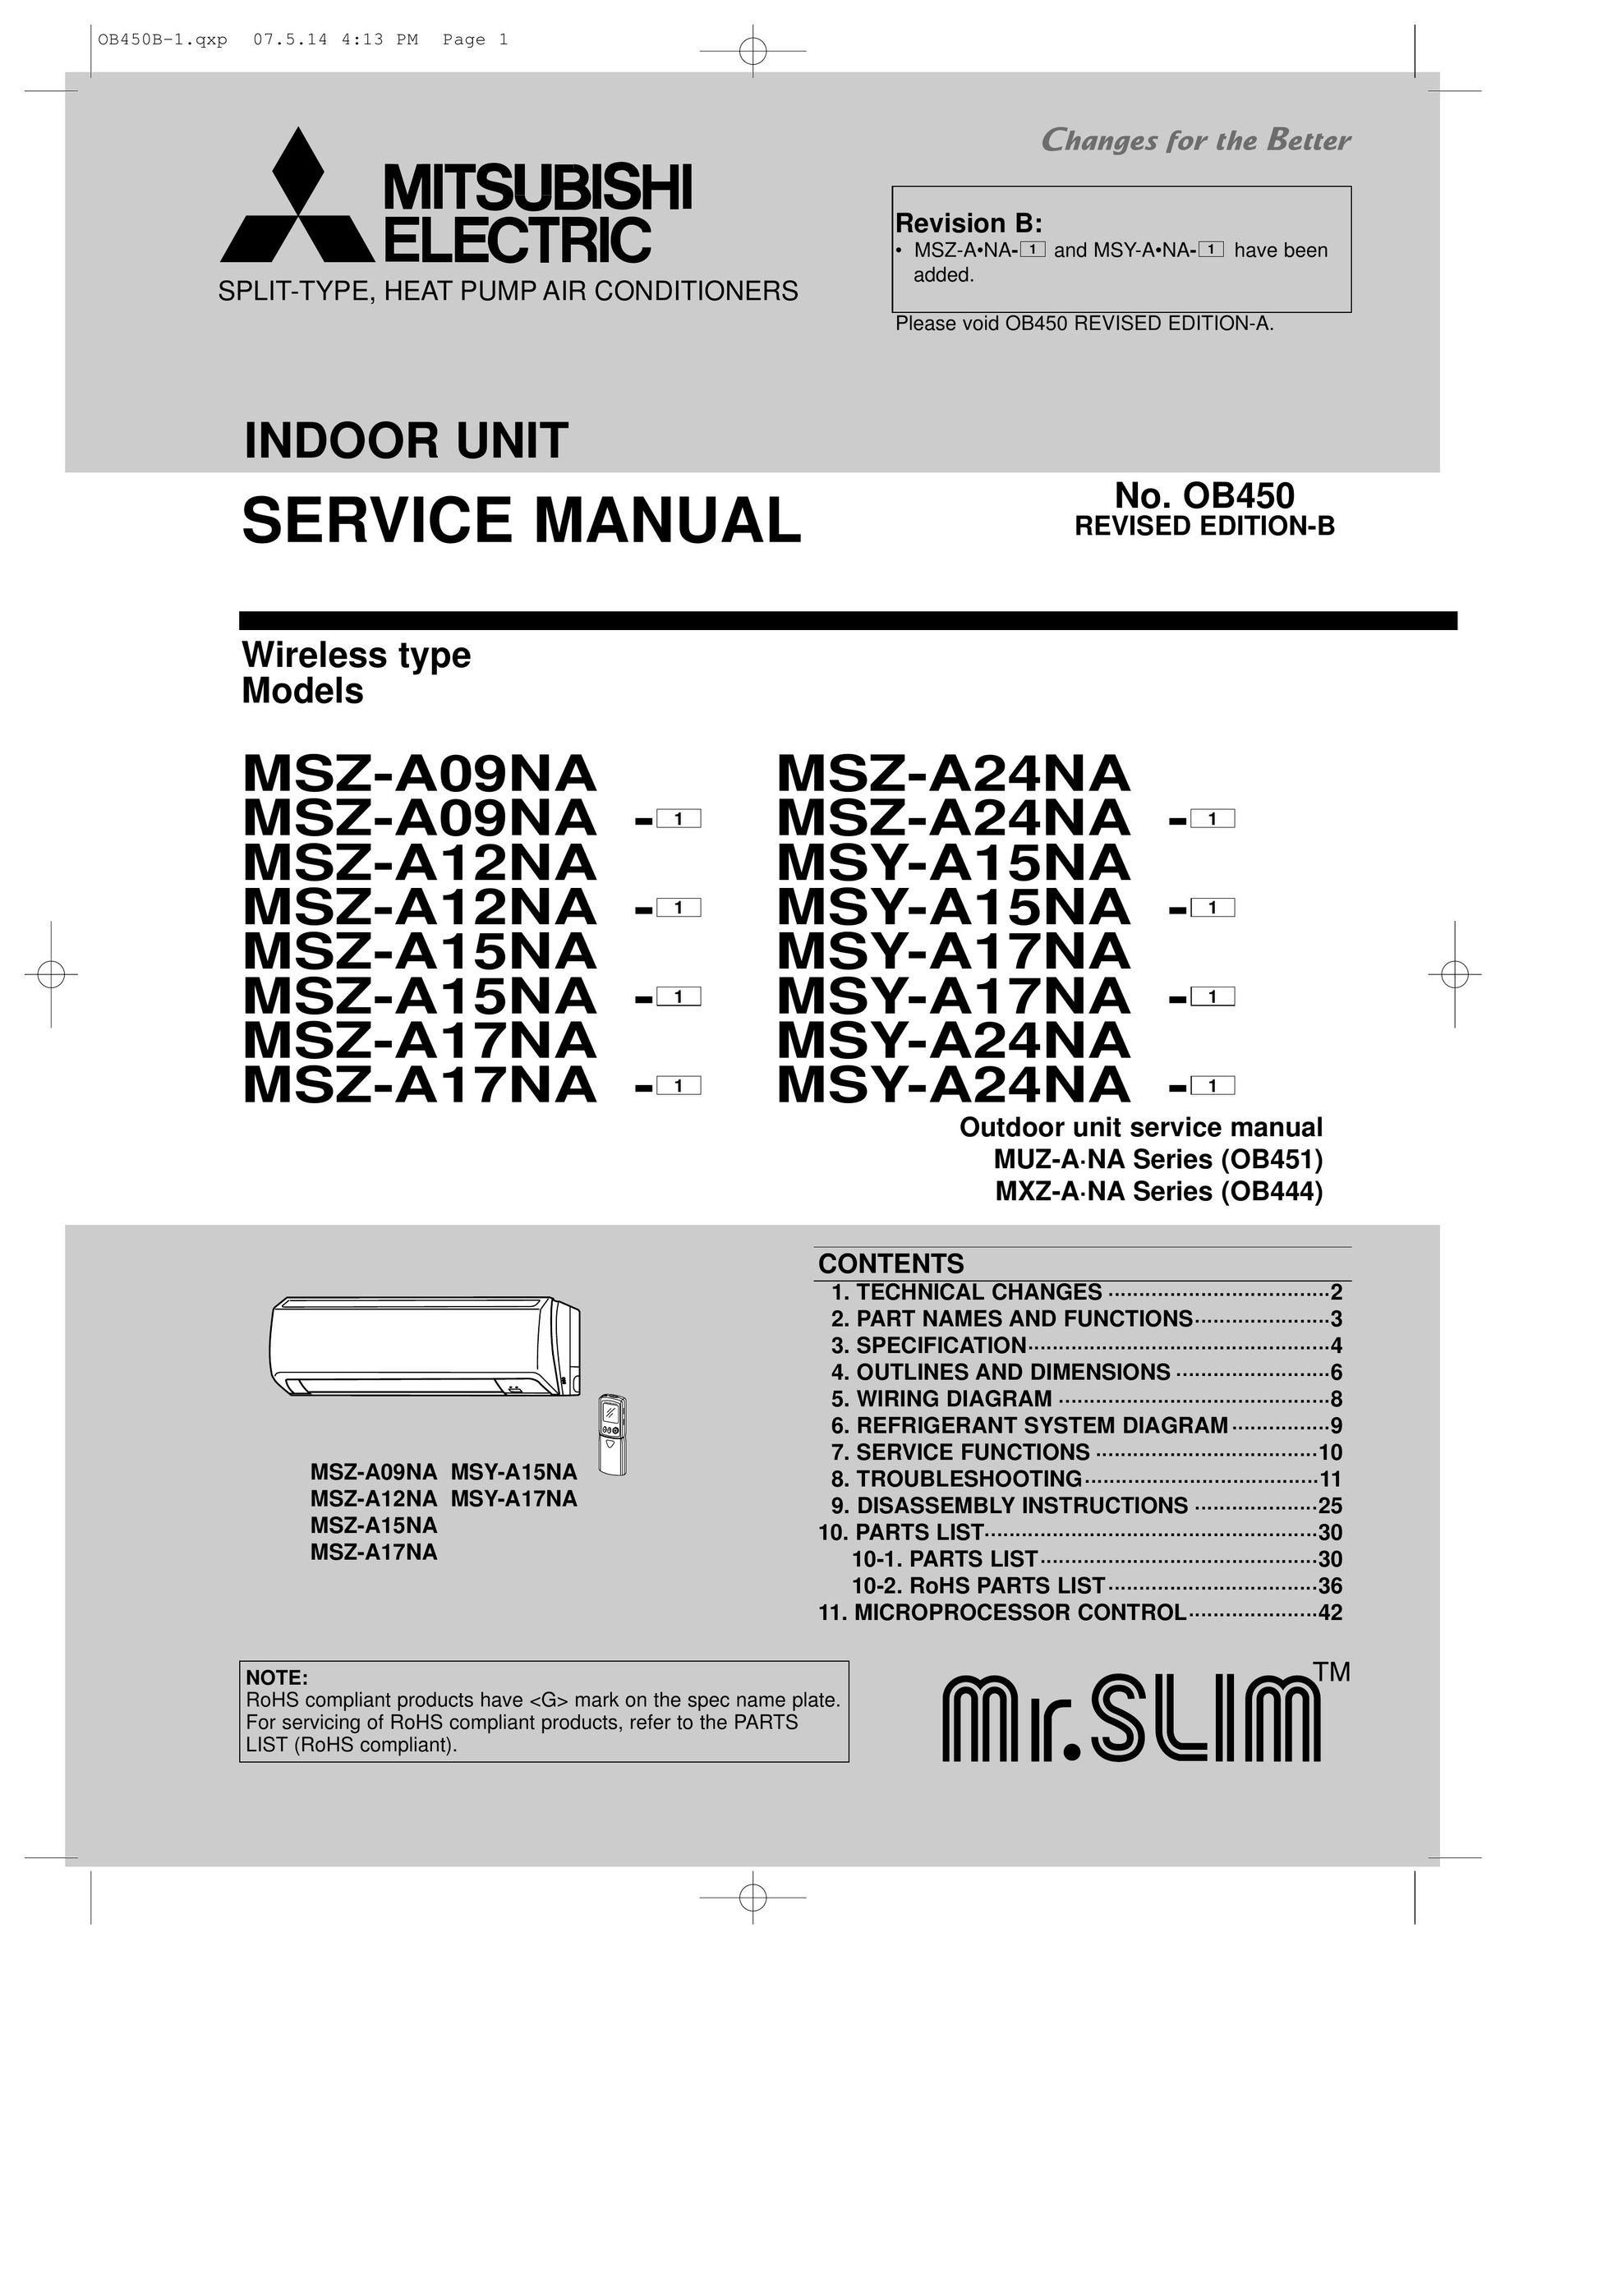 Mitsubishi Electronics MSZ-A17NA Heat Pump User Manual